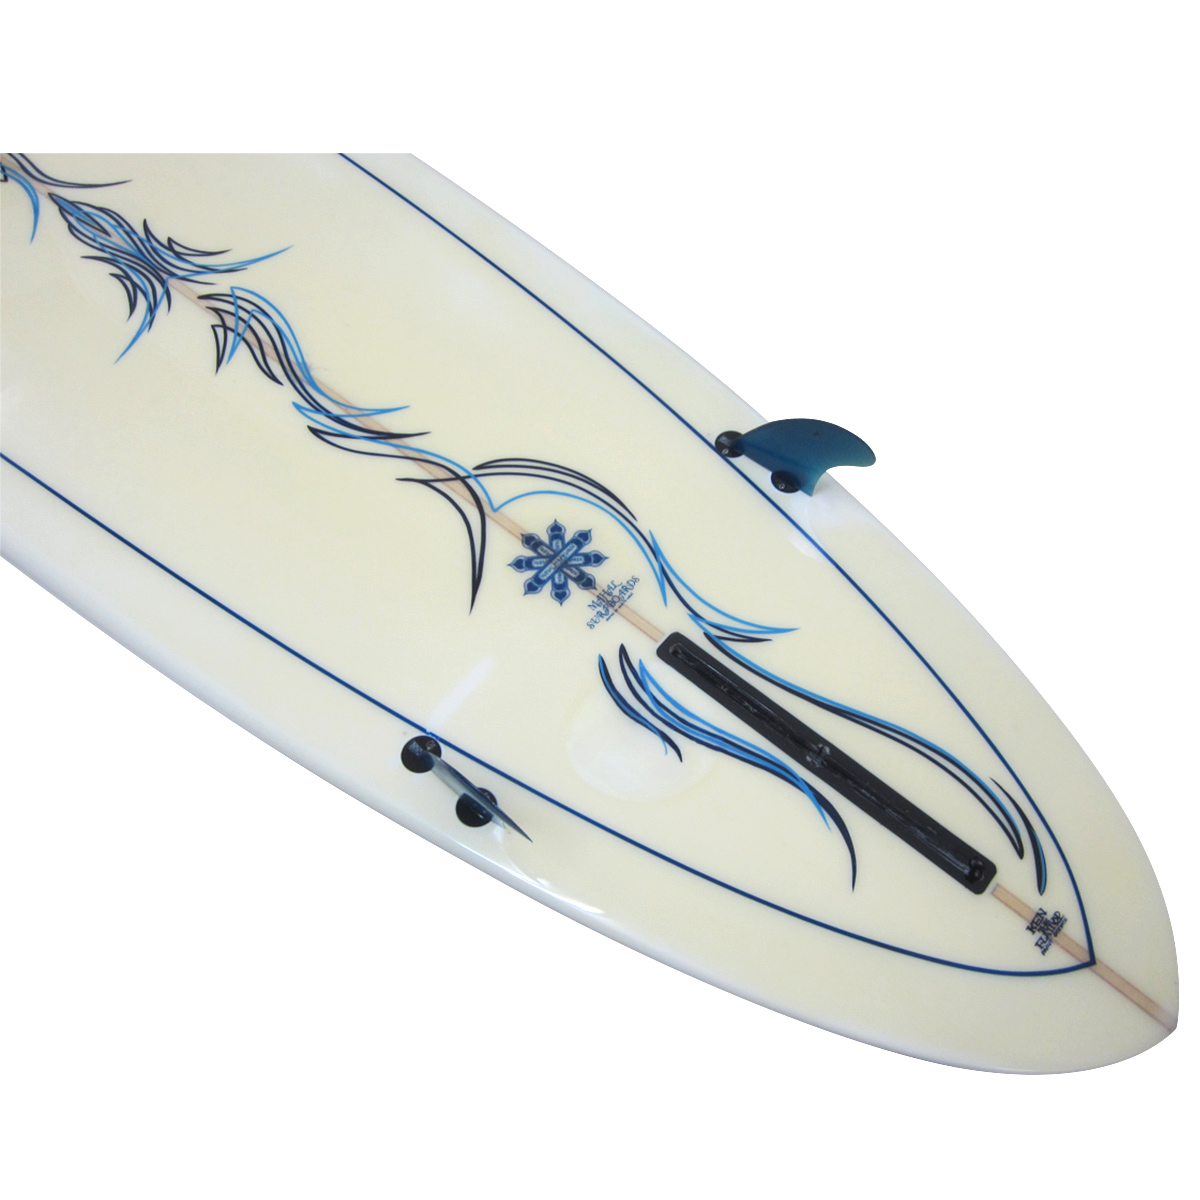 MAHAL SURFBOARDS / All Round Custom 9'2